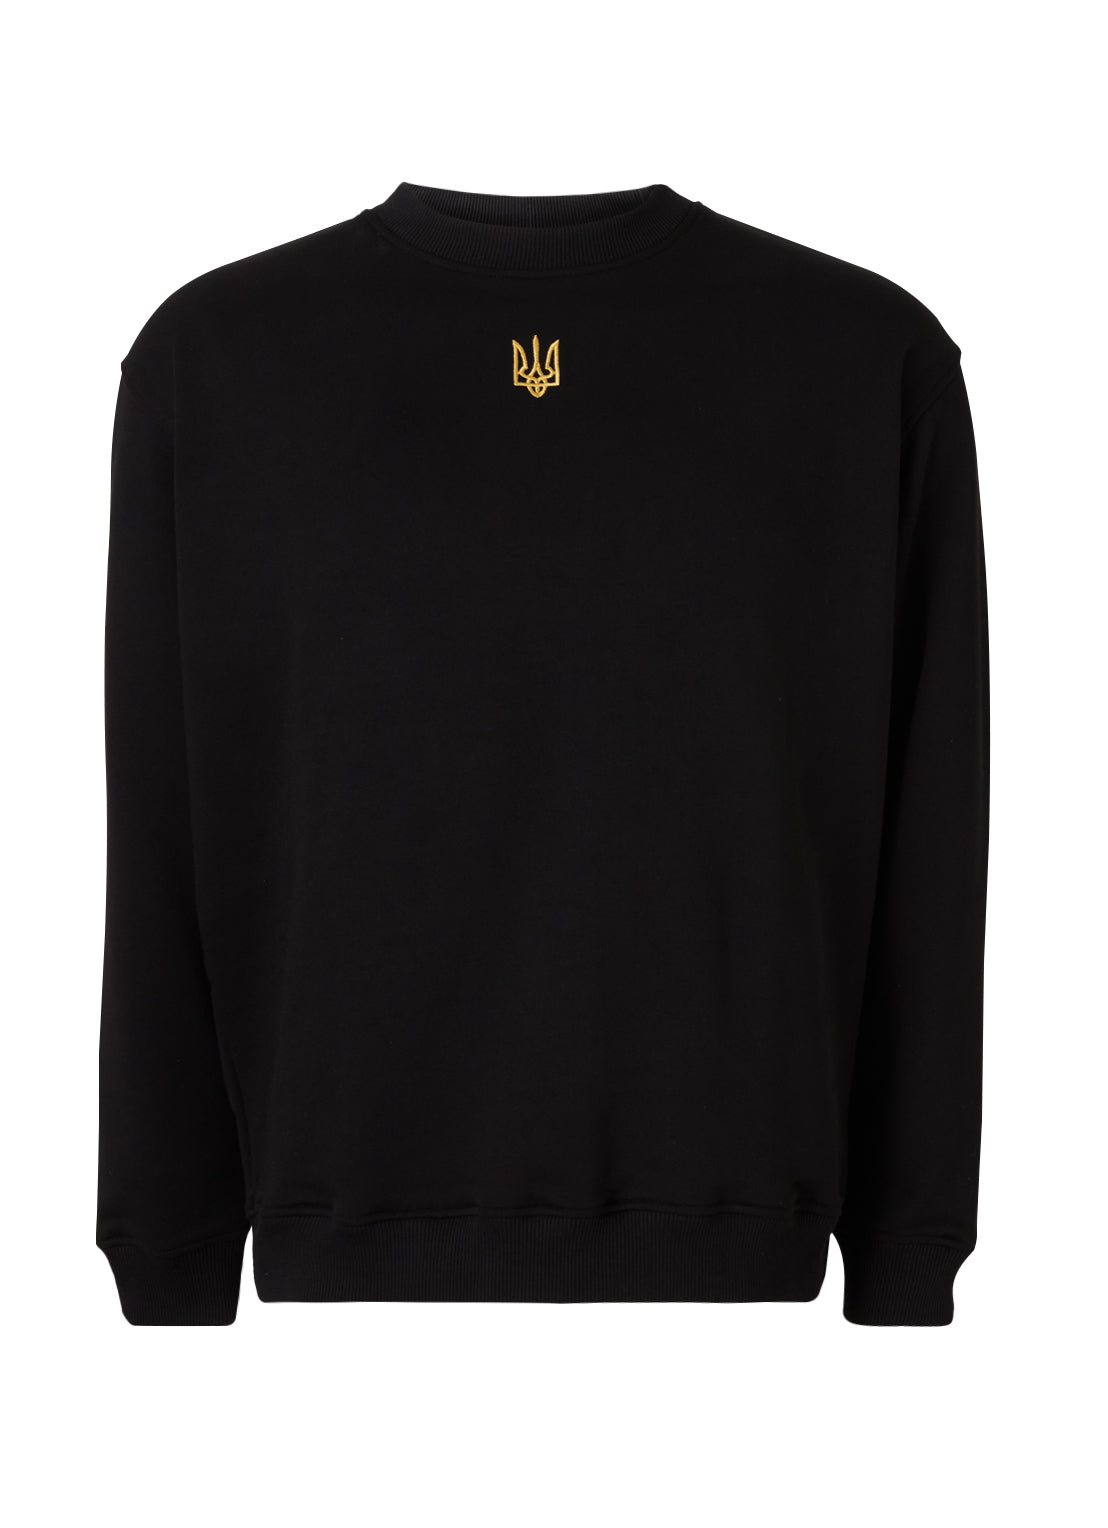 Black Tryzub sweatshirt